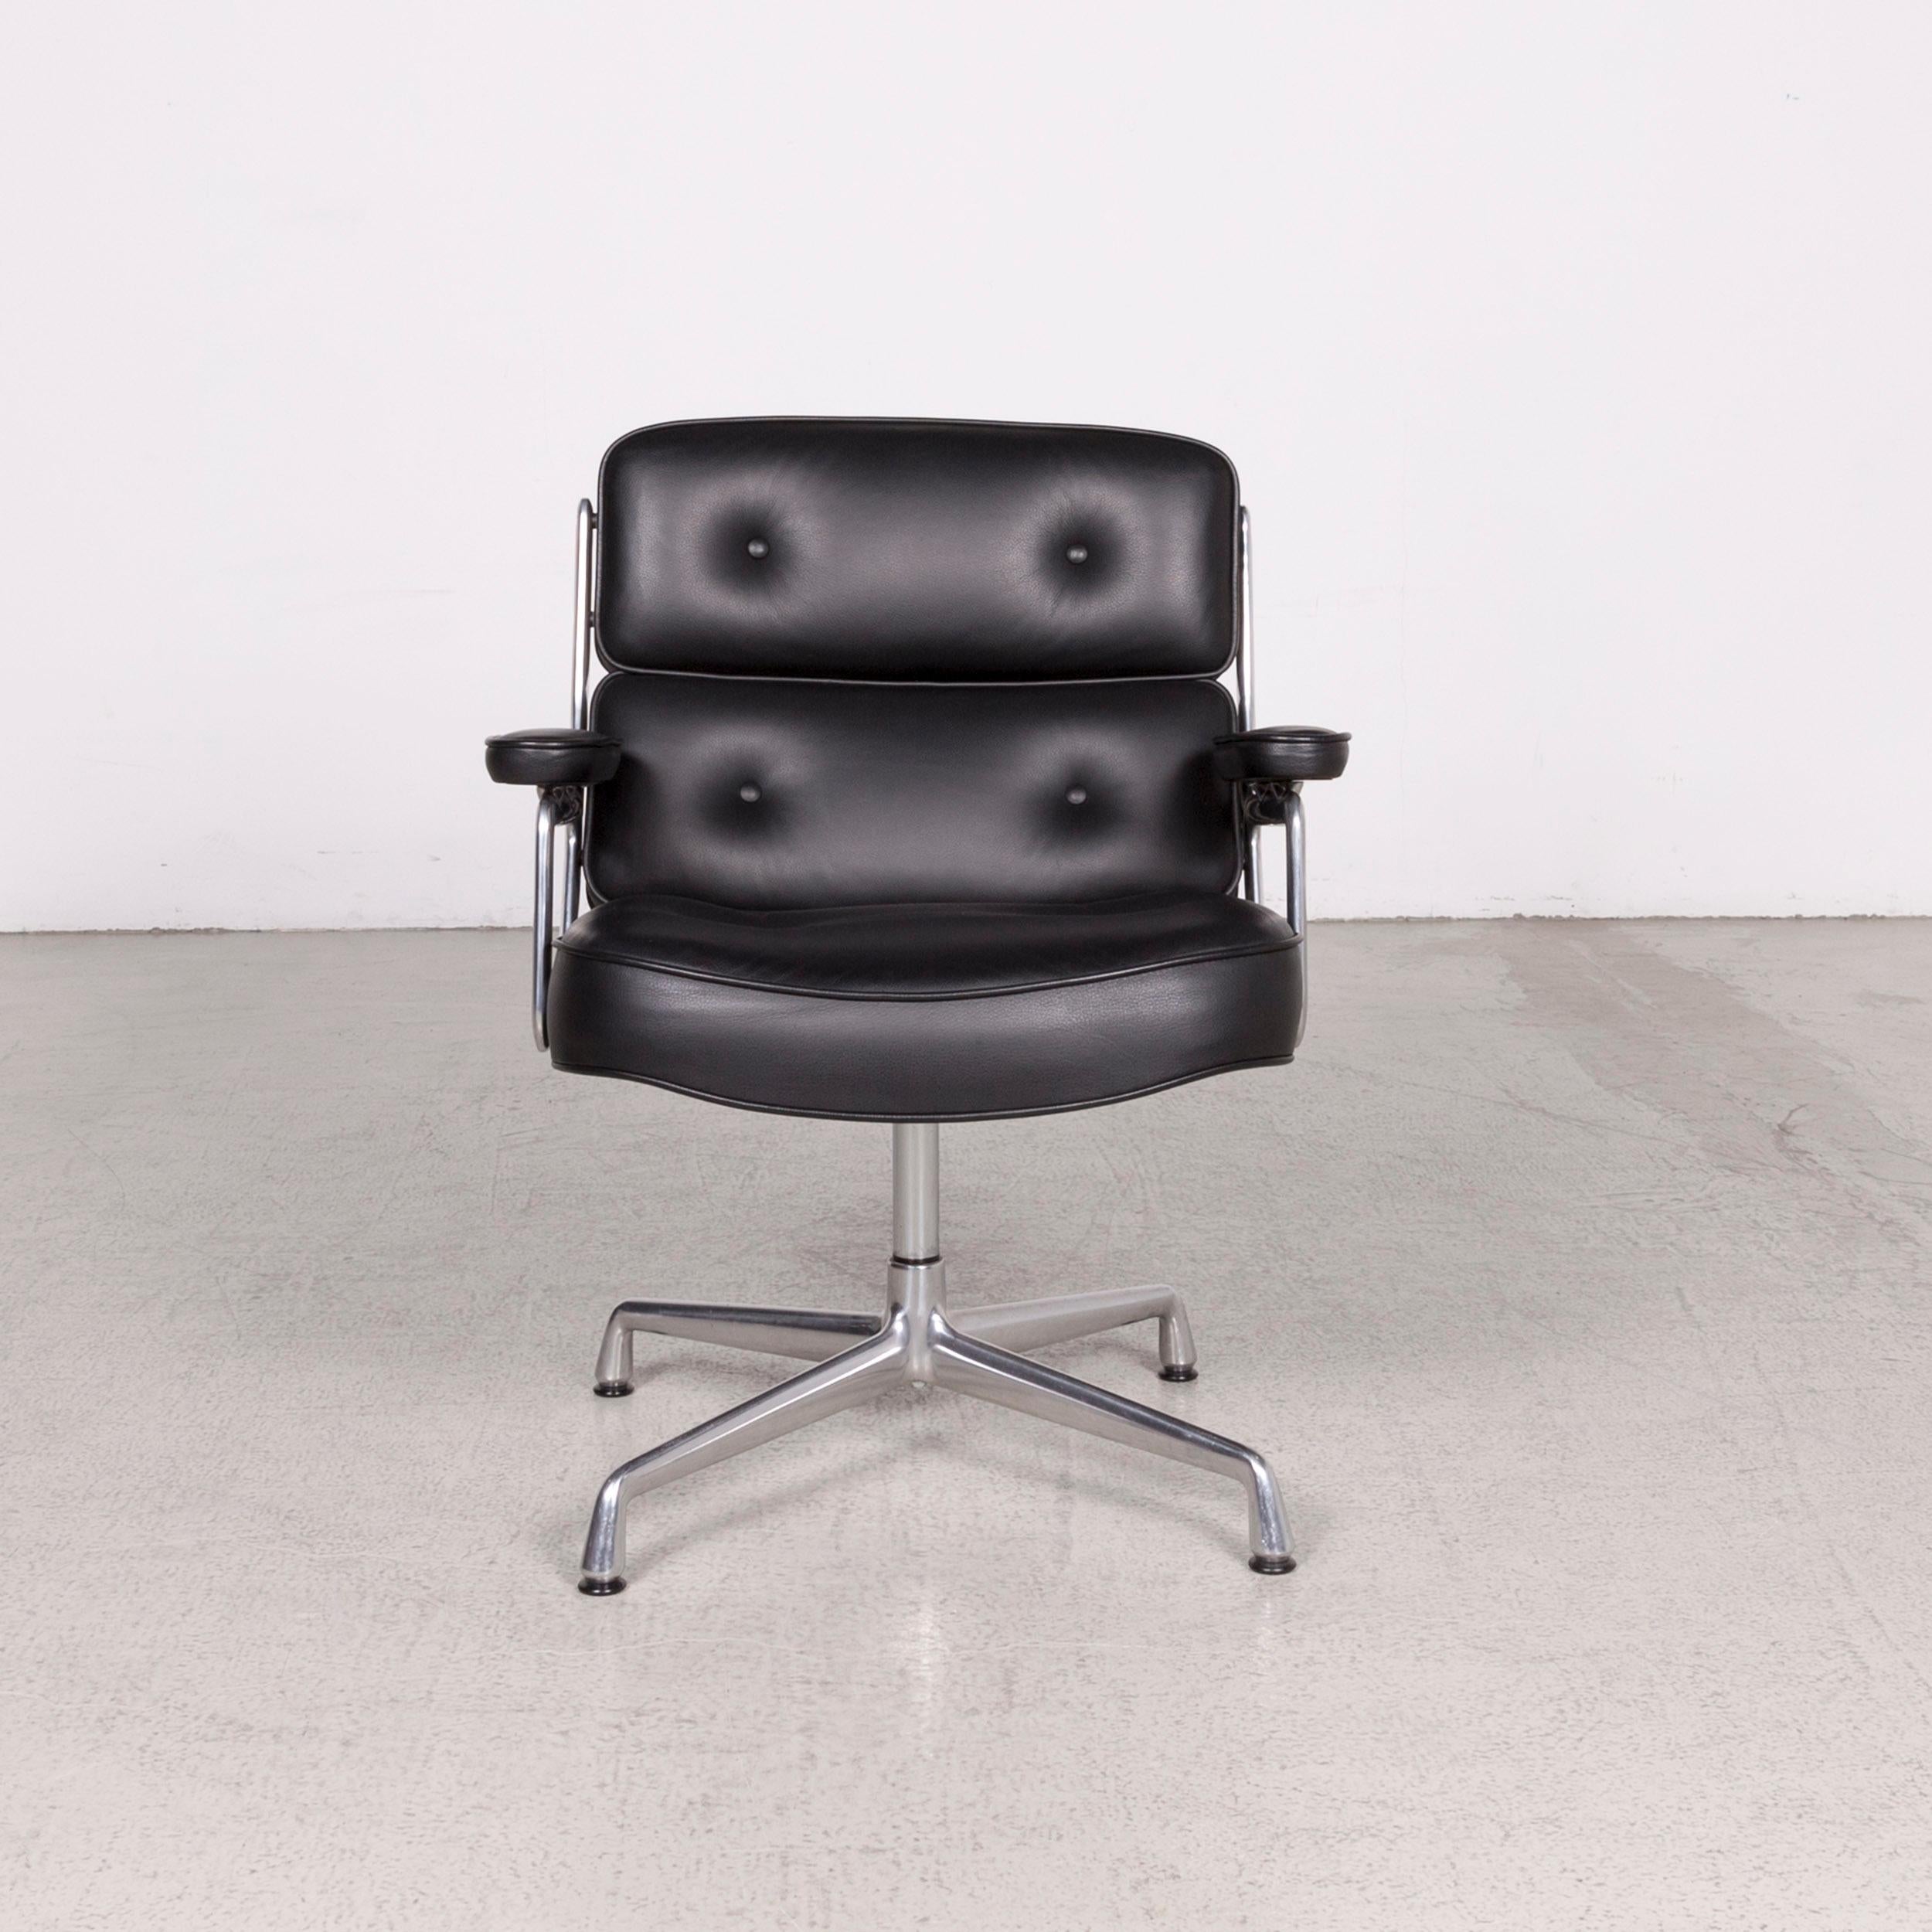 designer leather chair